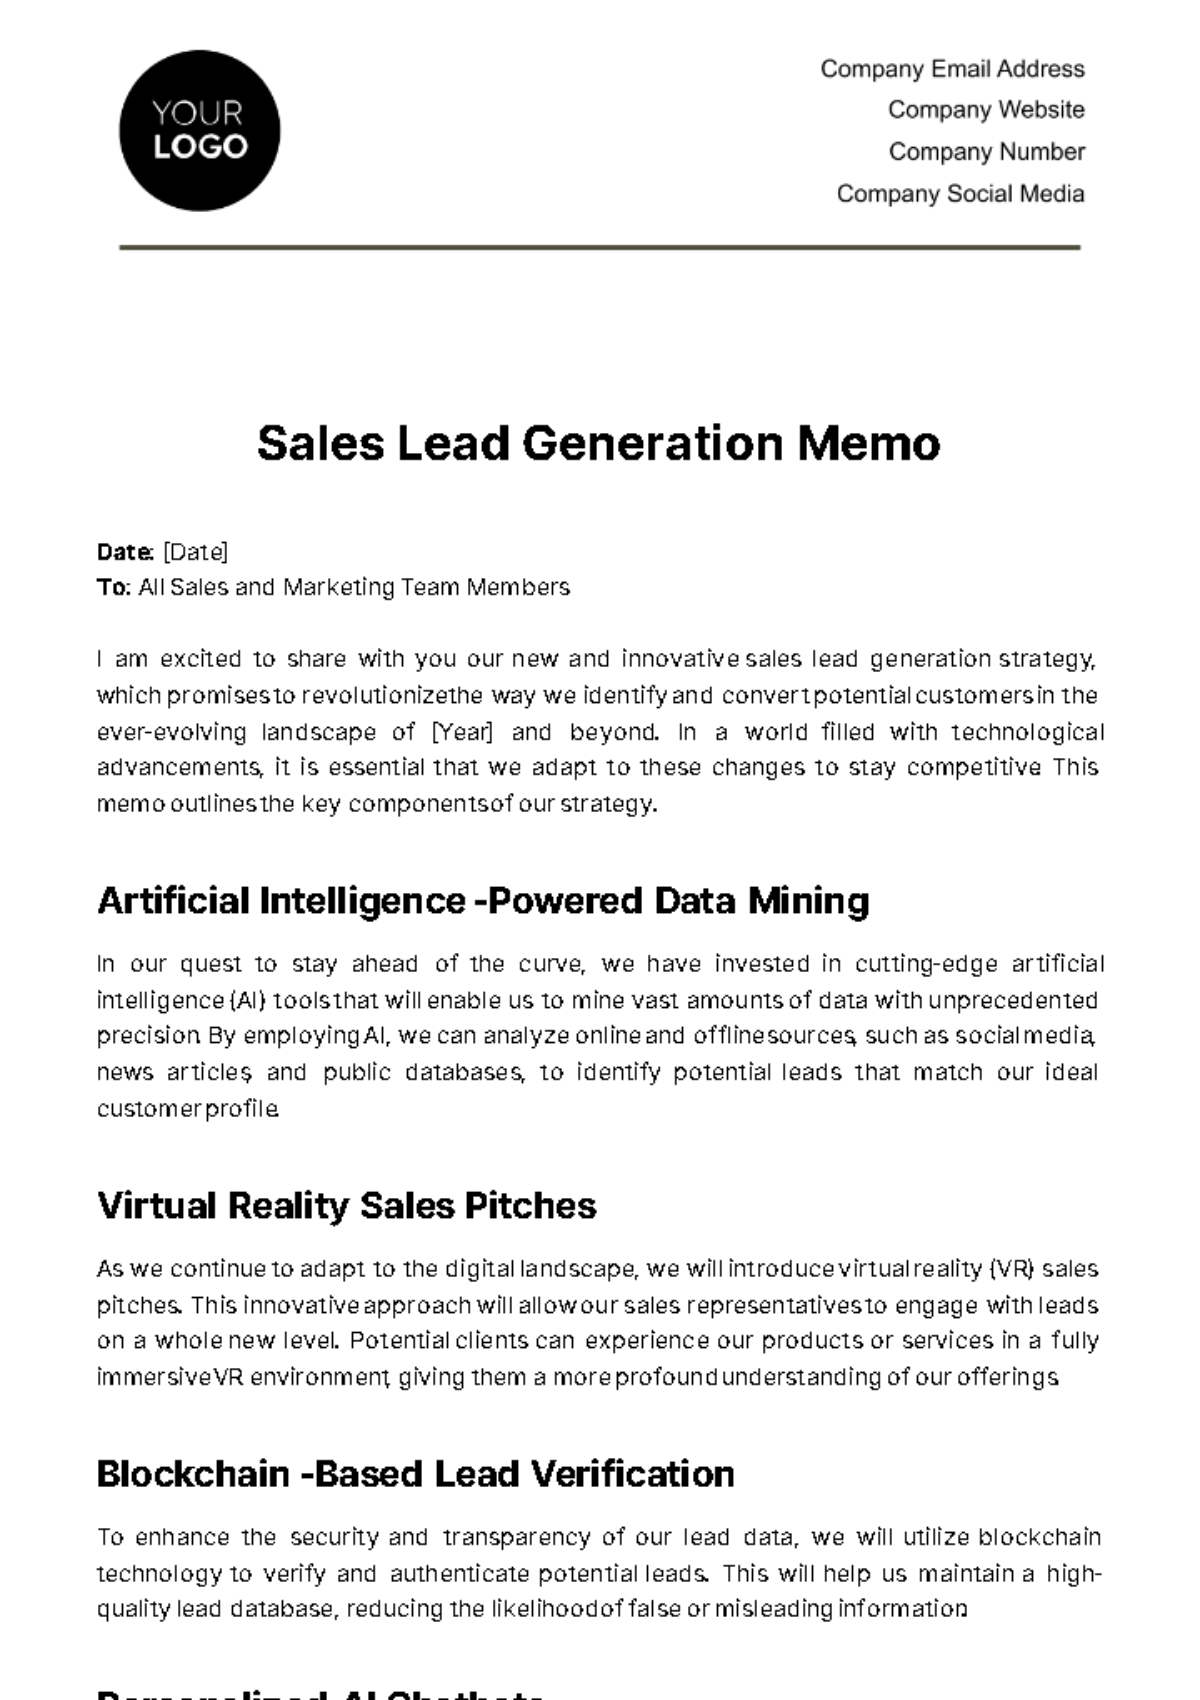 Free Sales Lead Generation Memo Template